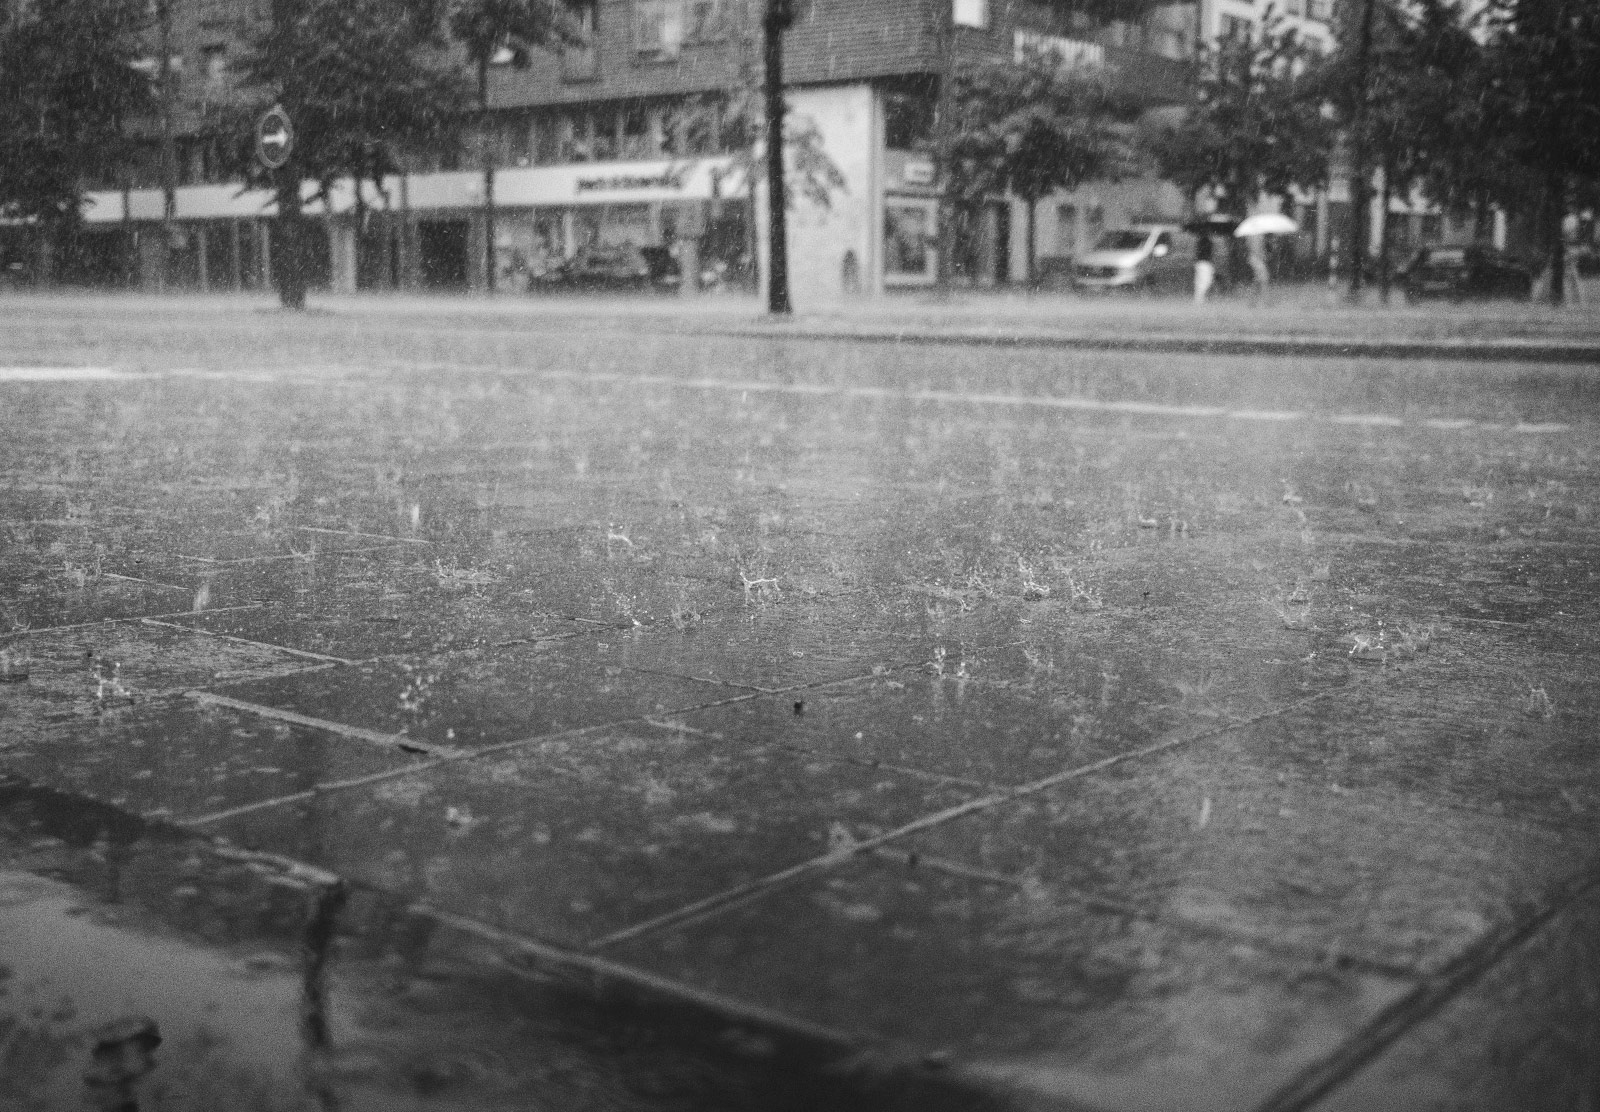 Rain on pavement